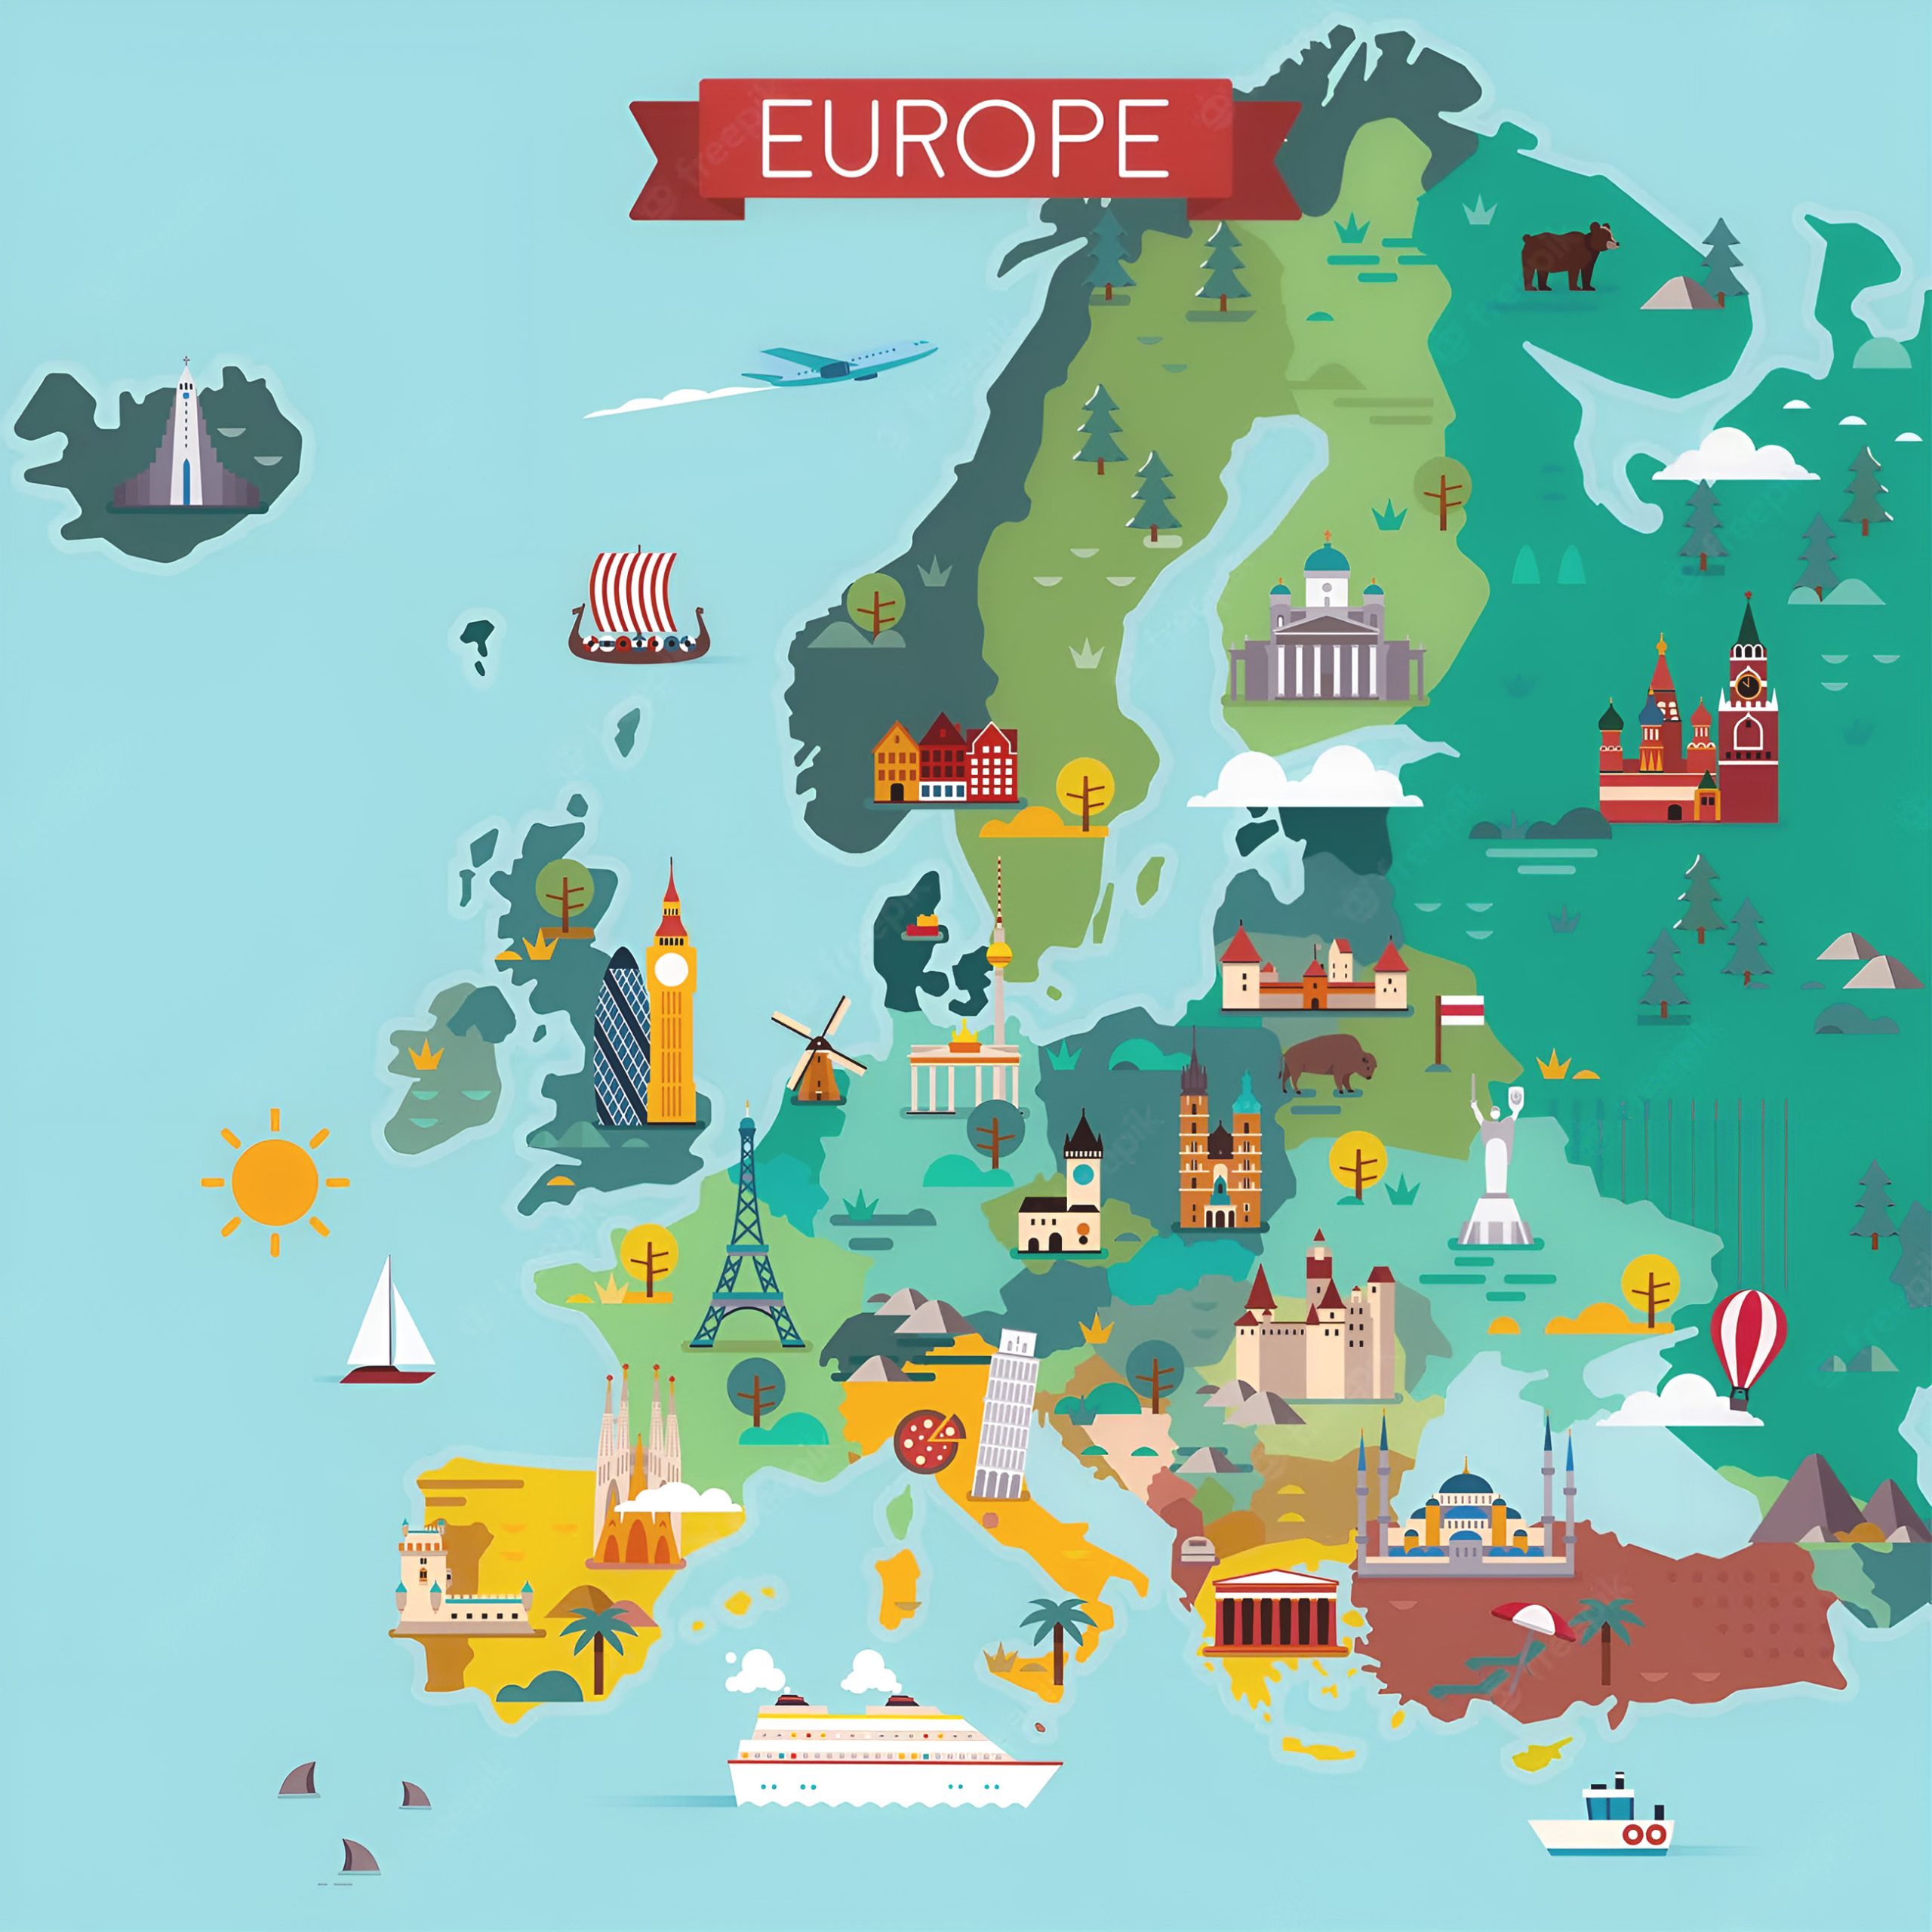 Europe Travel (Tourist) Map